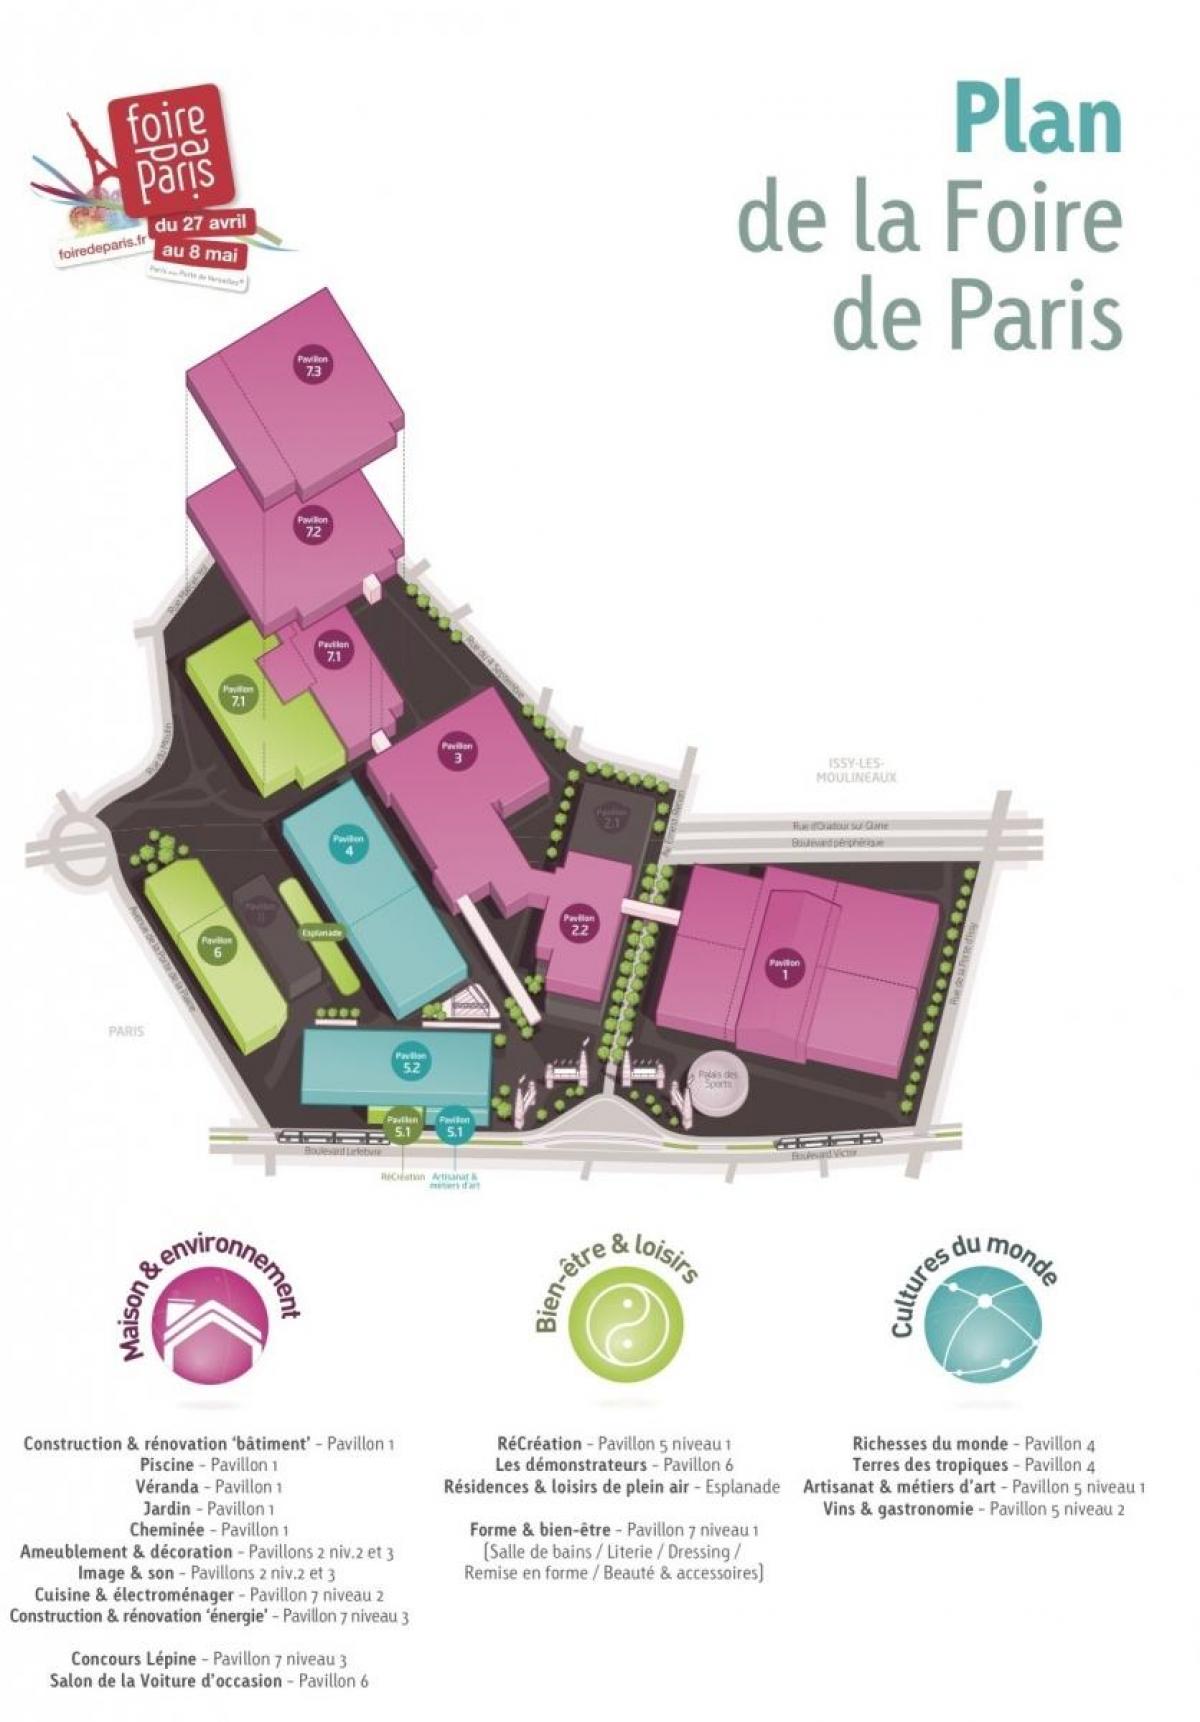 નકશો Foire de Paris